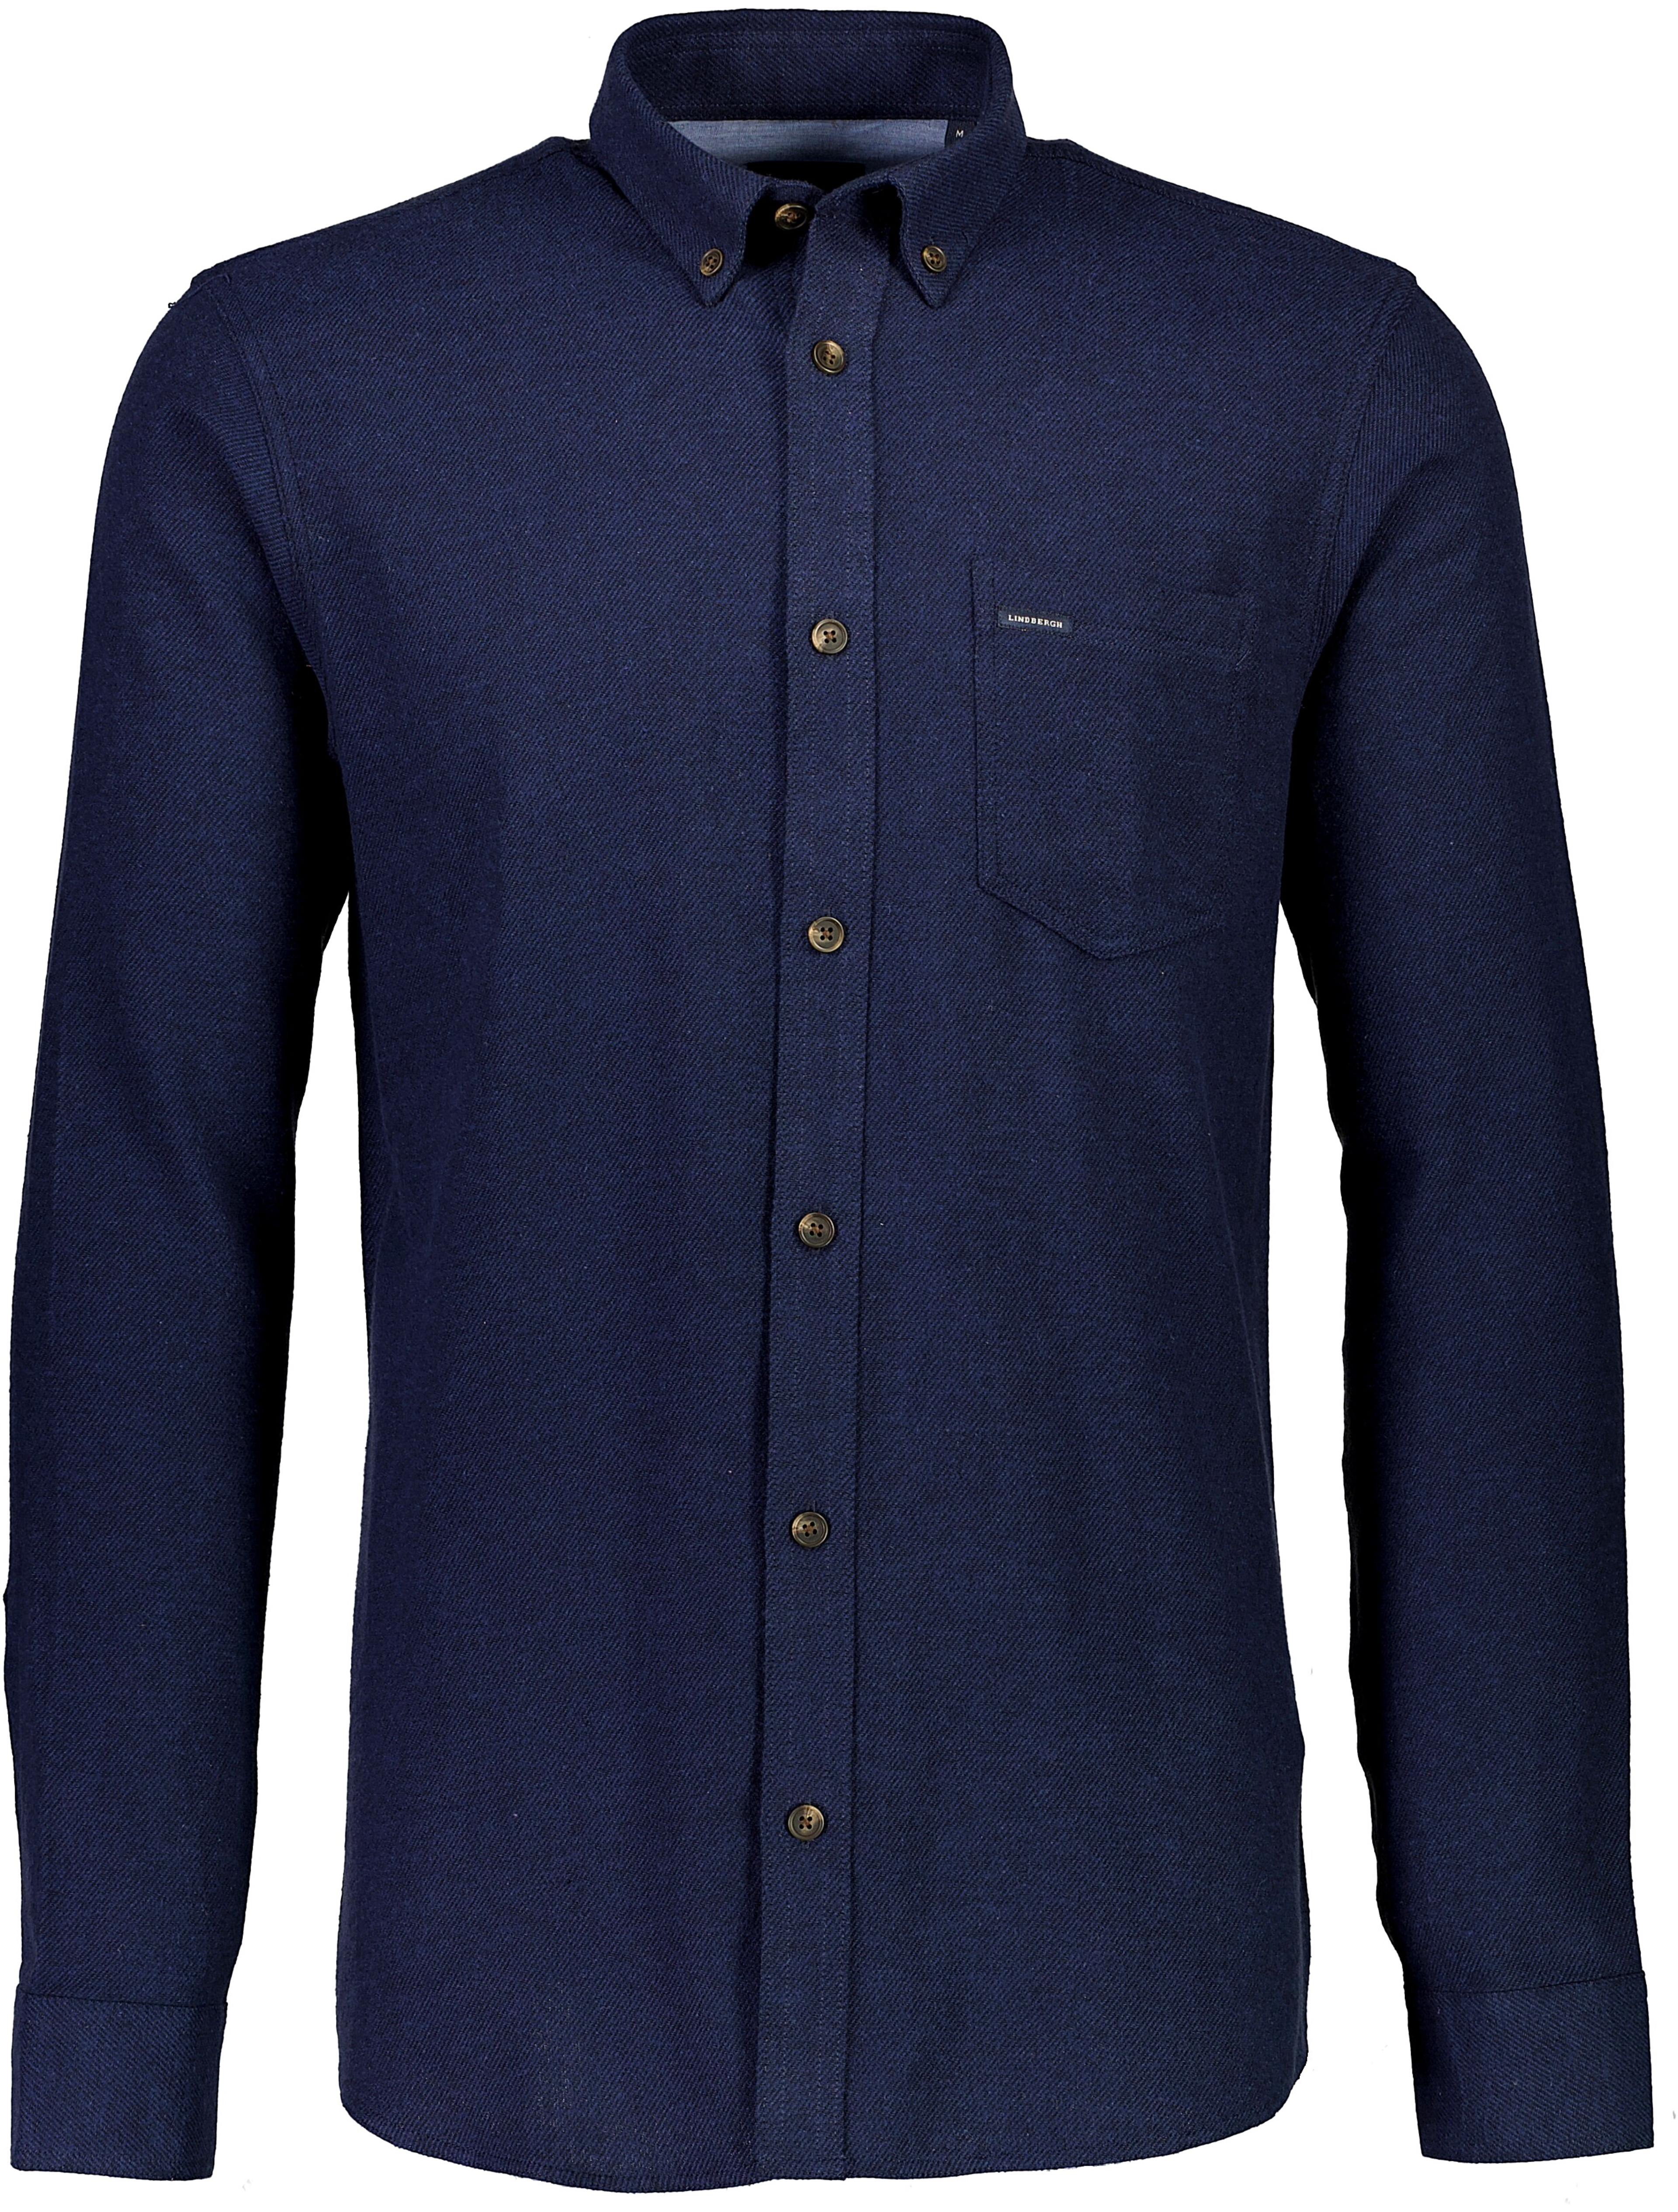 Lindbergh Casual shirt blue / navy